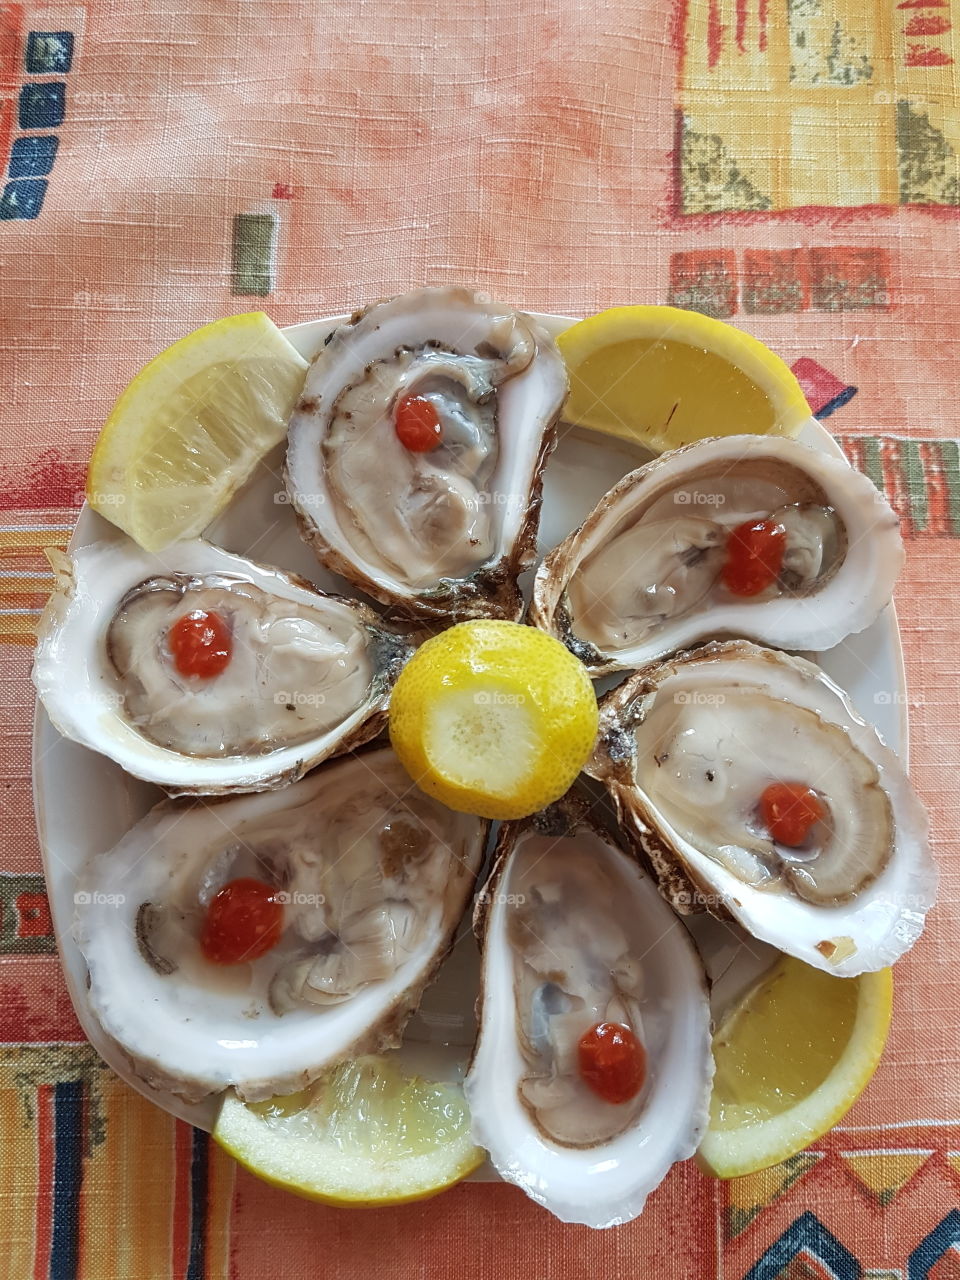 oyster bar